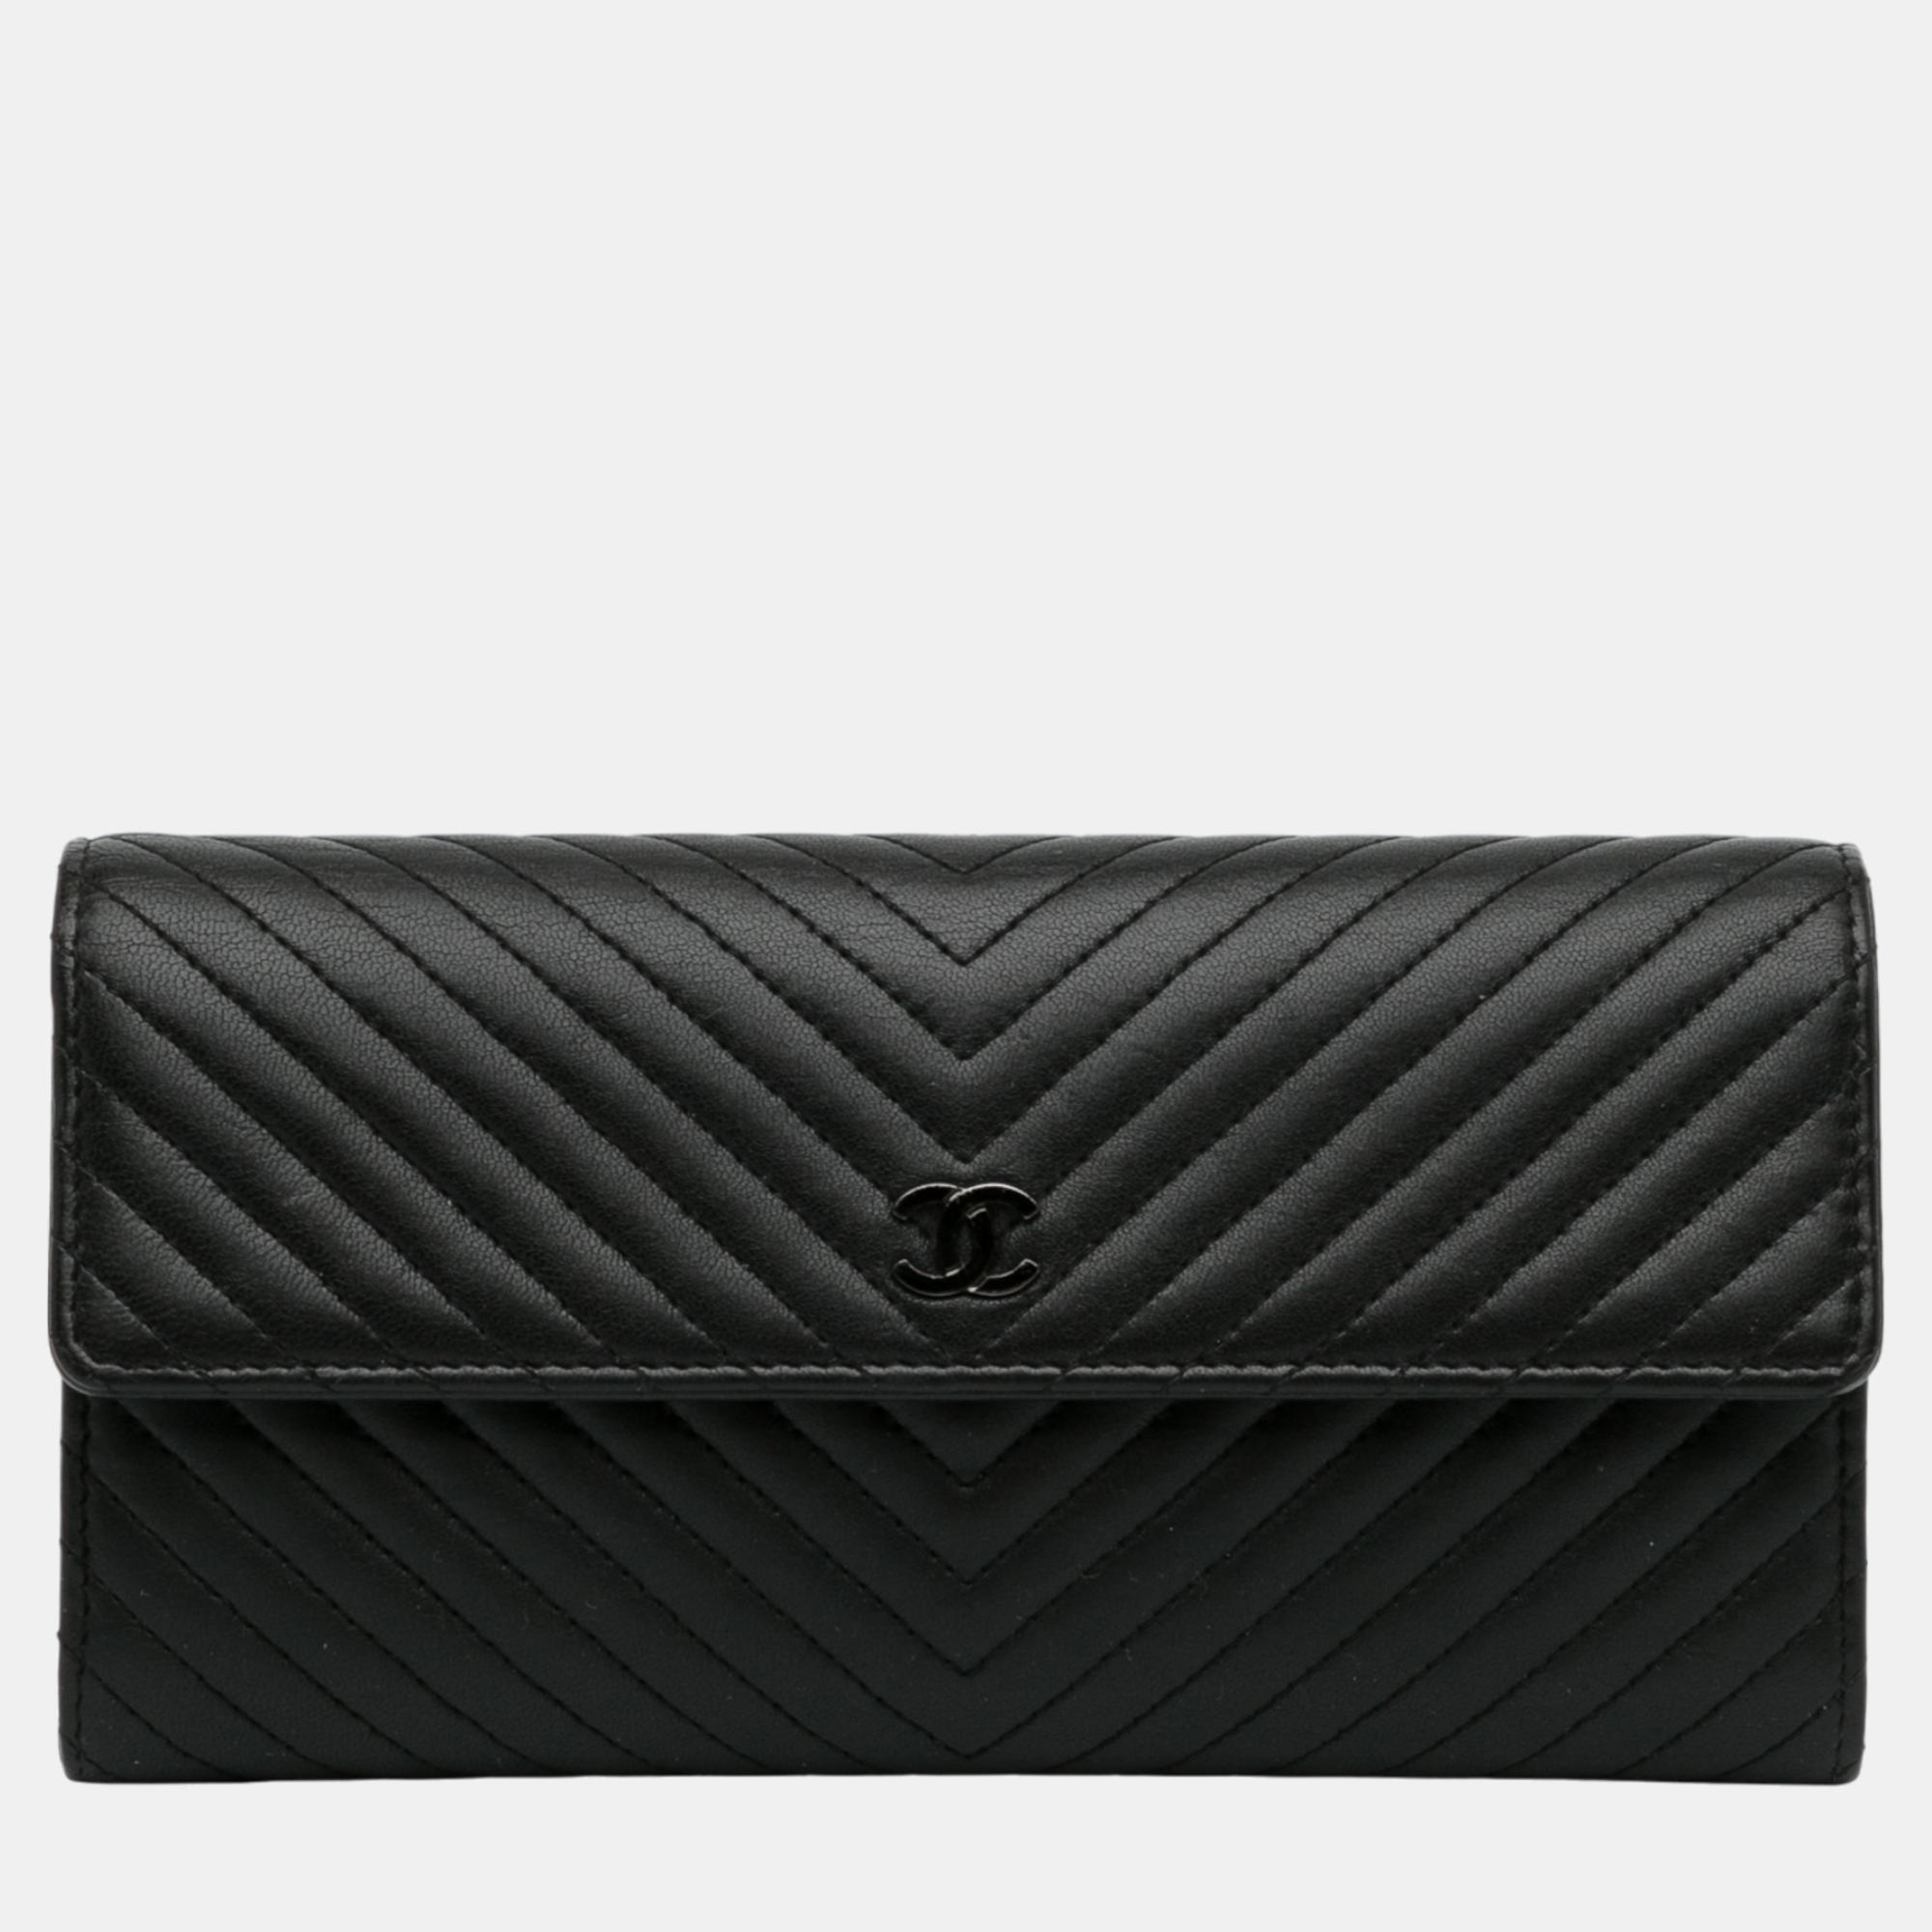 Chanel black cc chevron lambskin long wallet